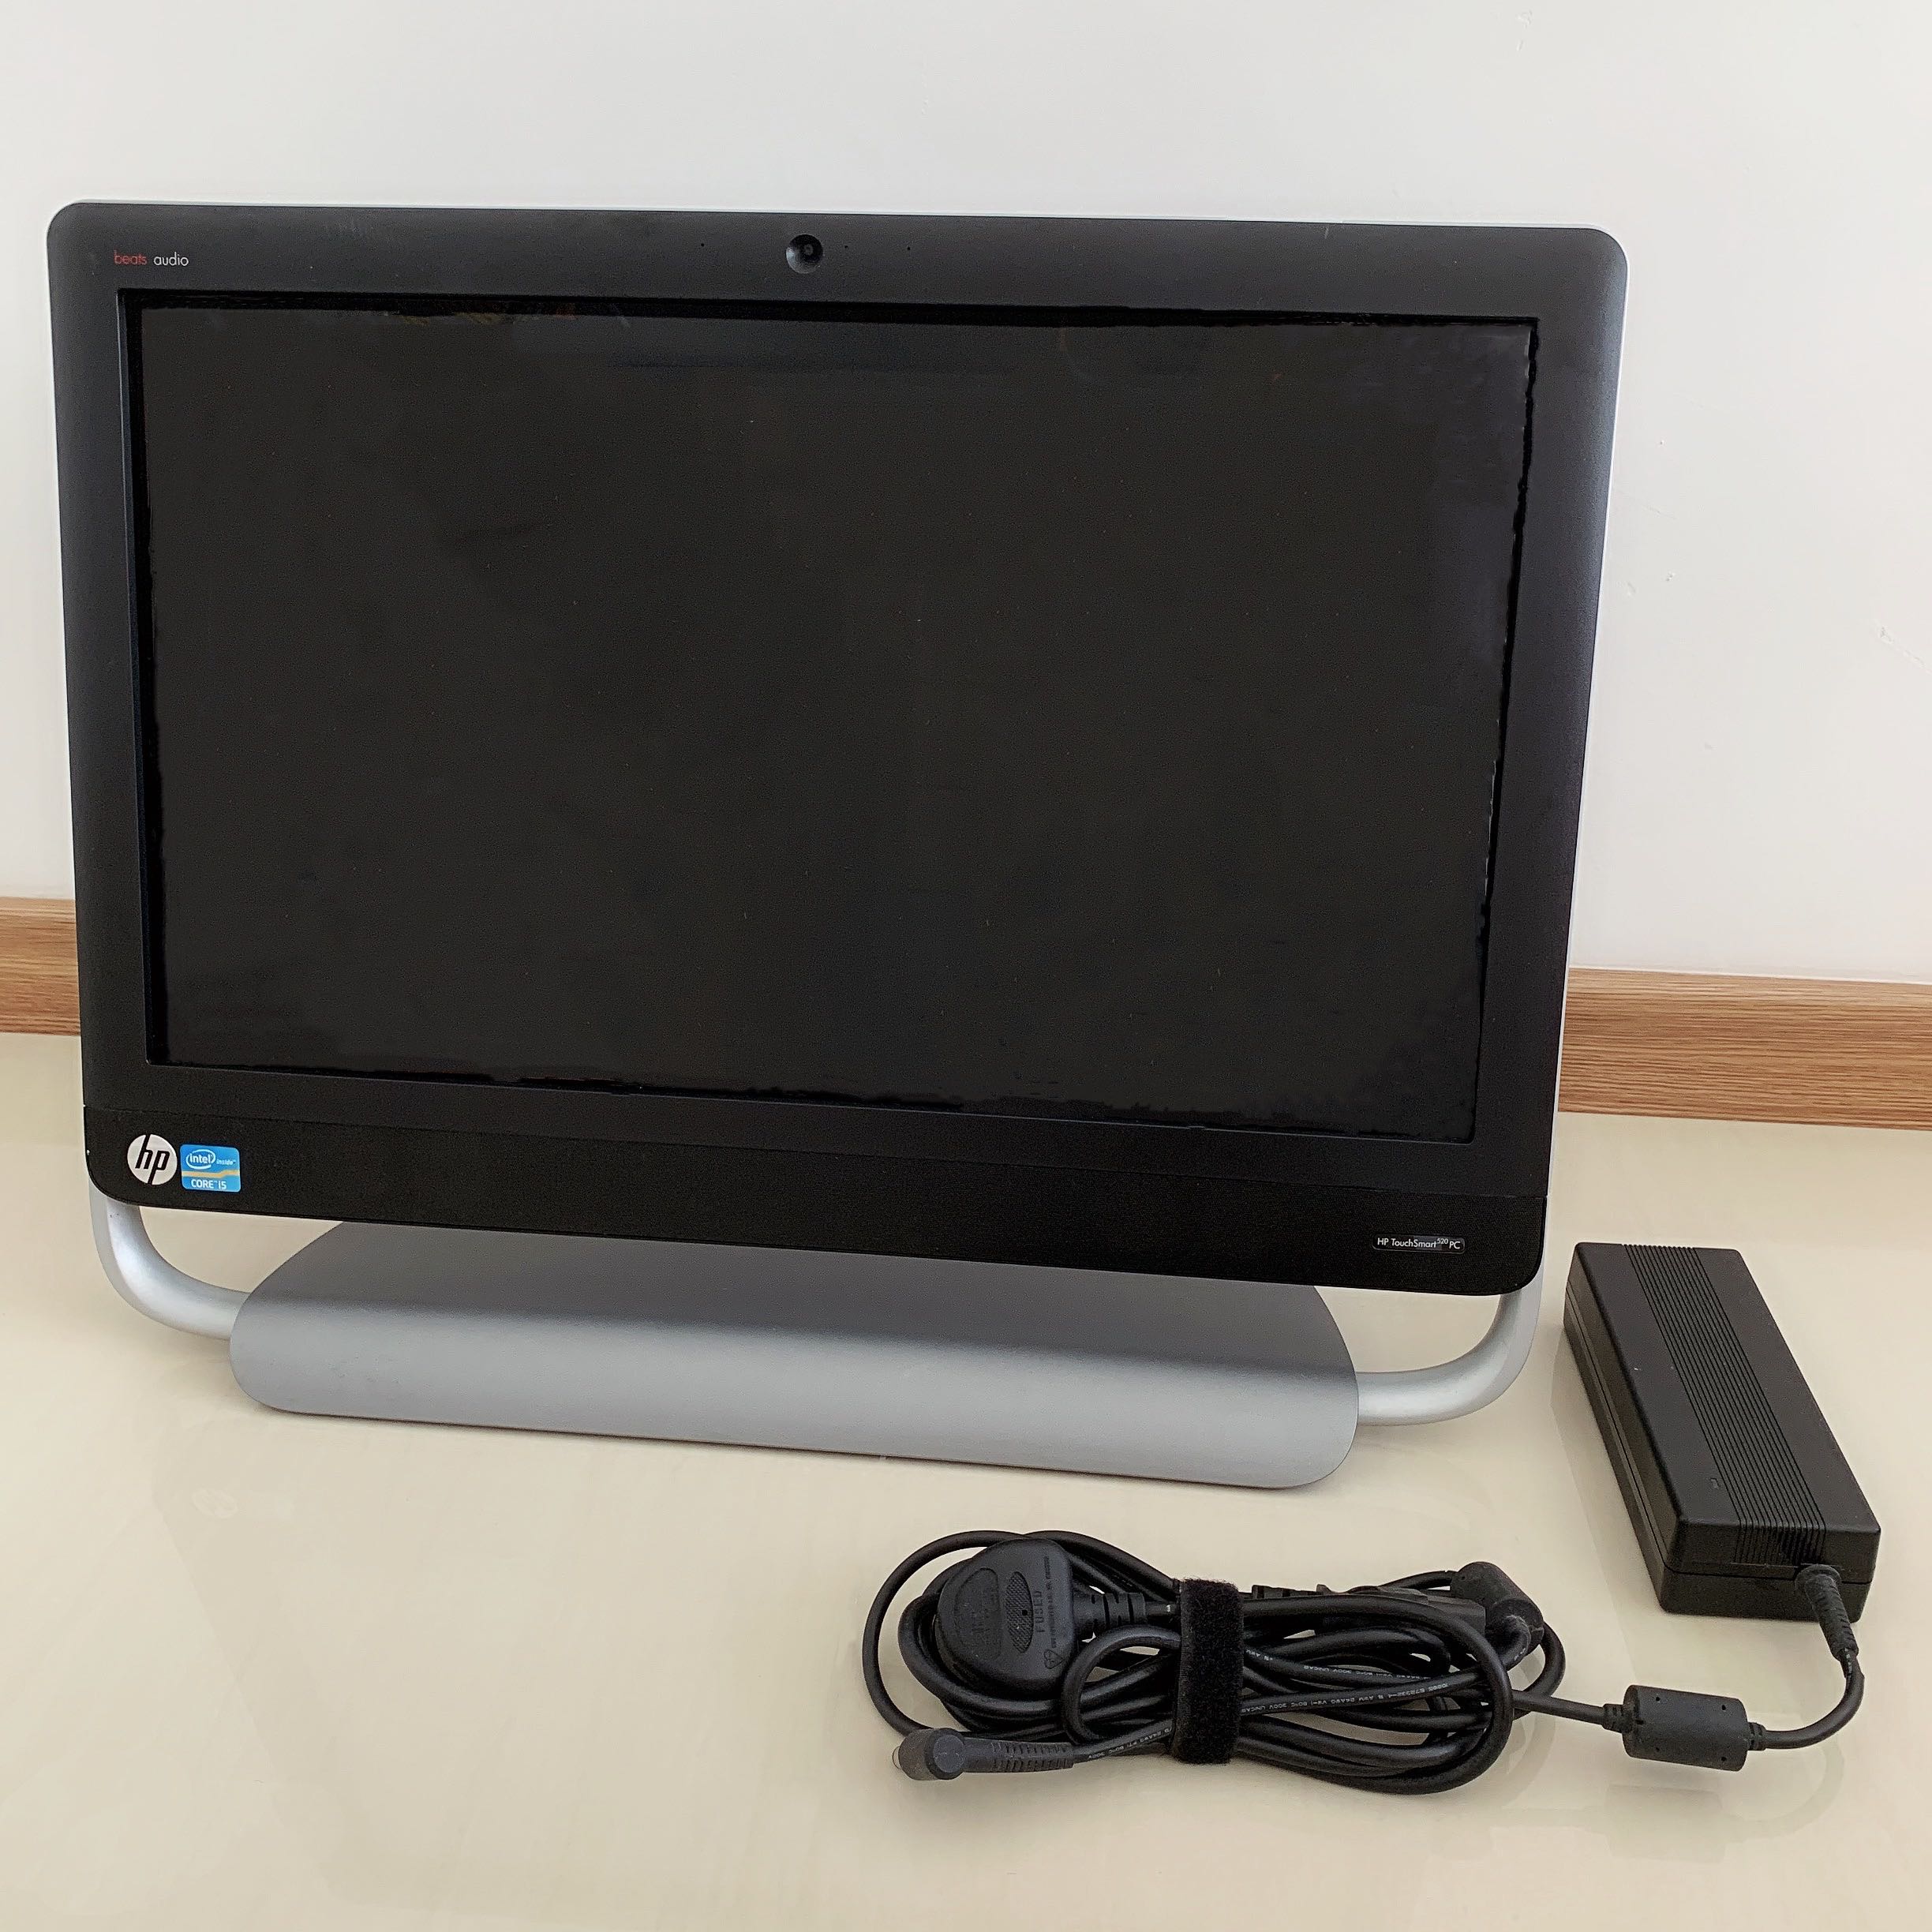 HP TouchSmart 520 PC, Computers & Tech, Desktops on Carousell